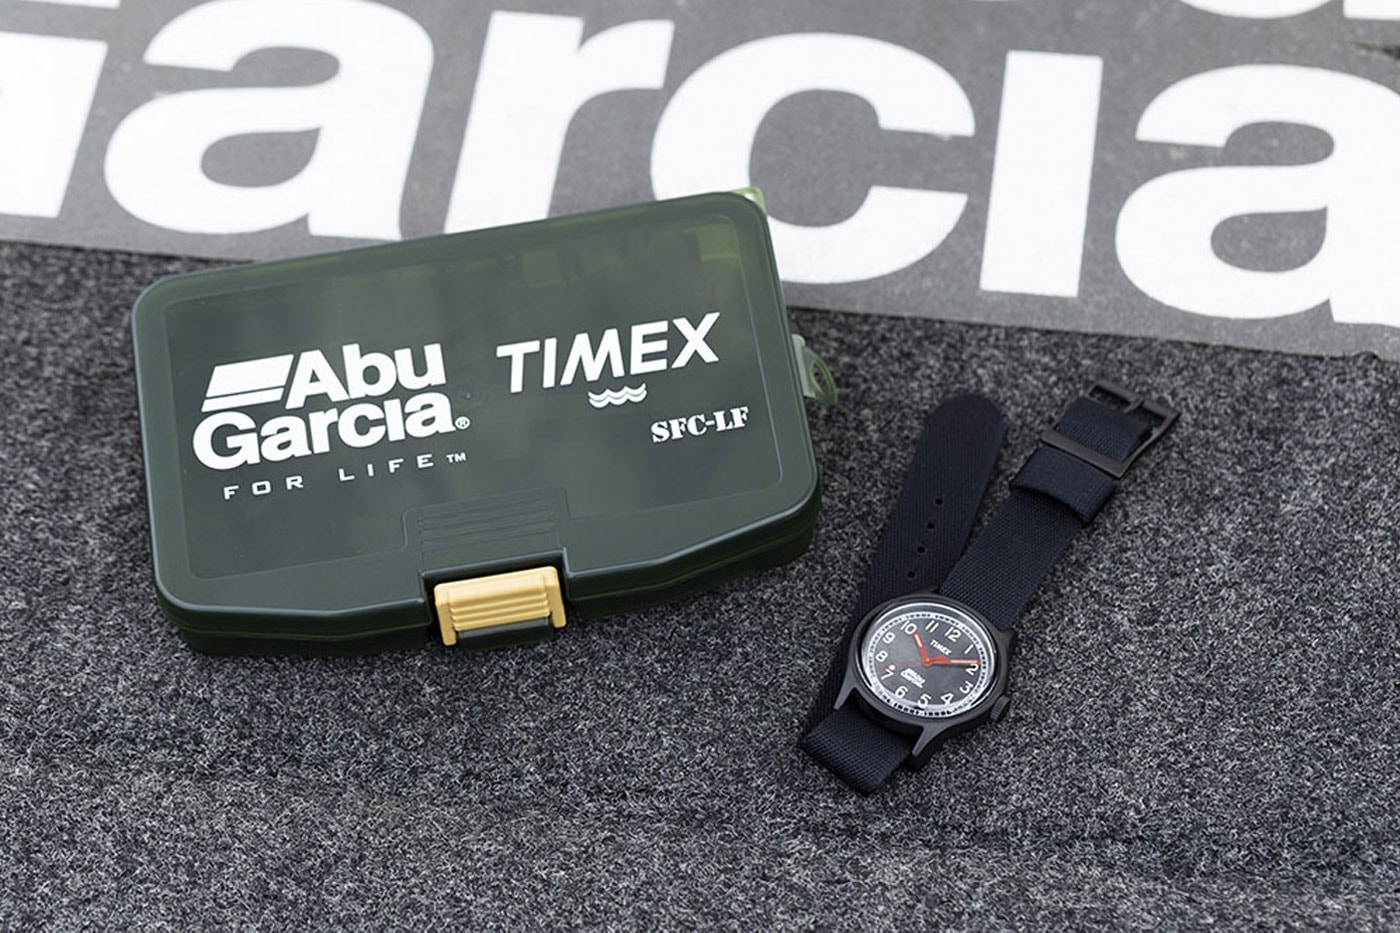 Abu Garcia Timex TW2V37900 watch fishing watches quartz Japan 